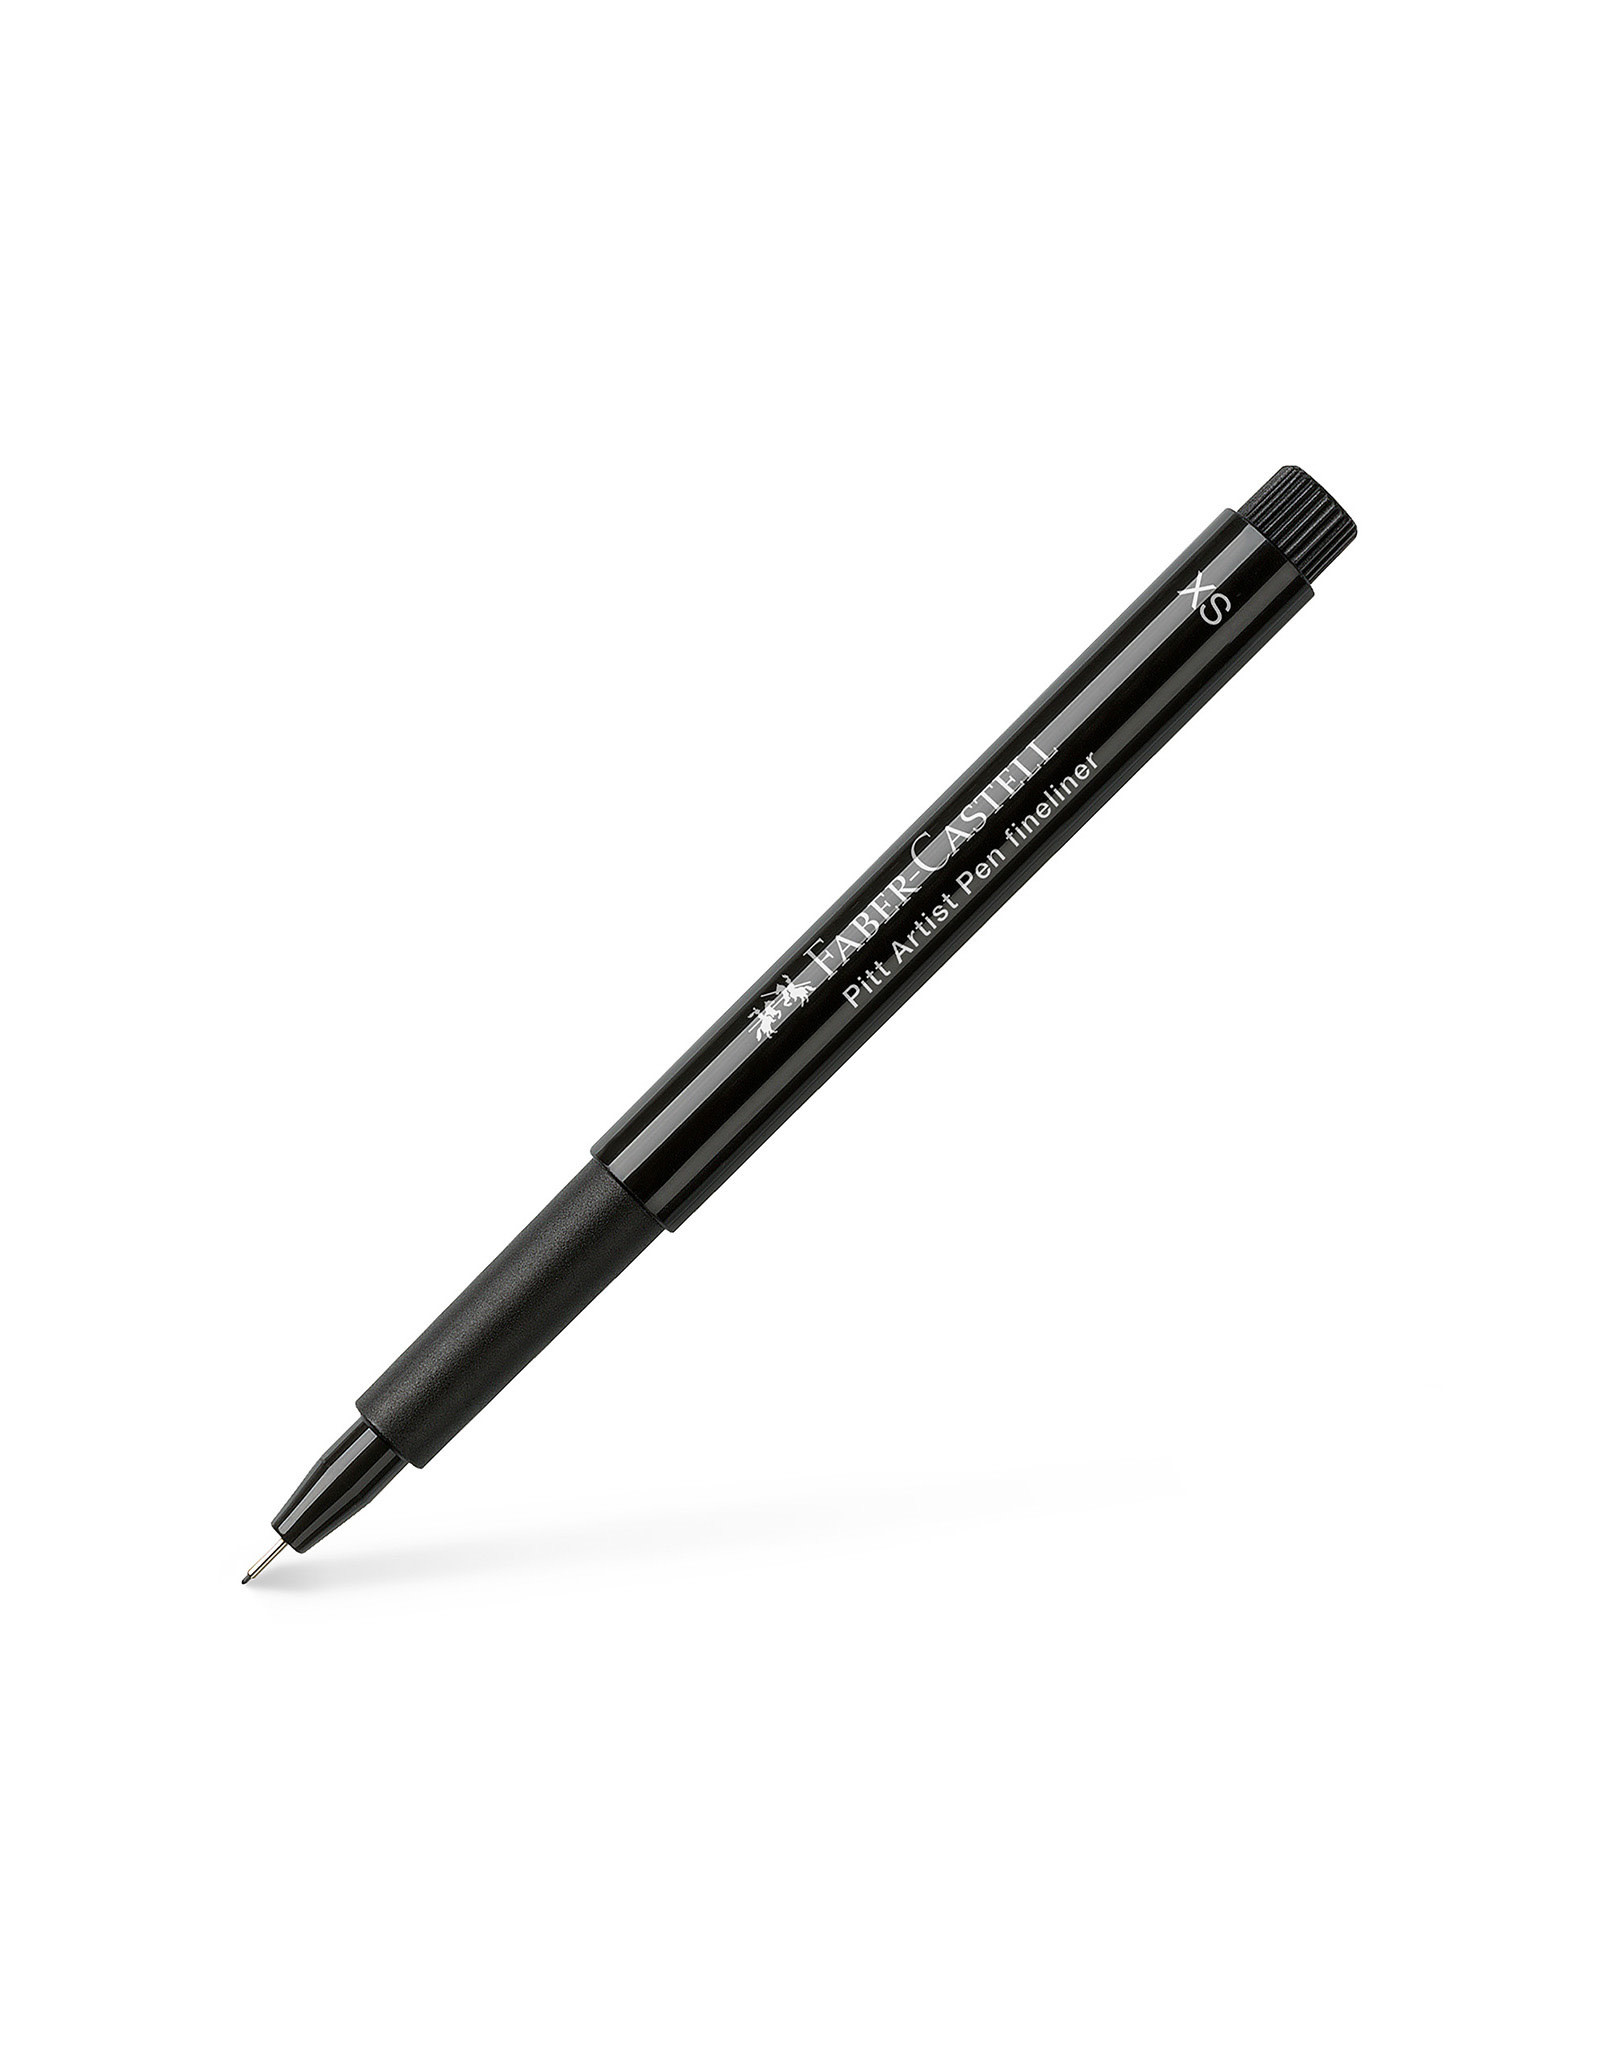 FABER-CASTELL Pitt Artist Pen, Extra Superfine, Black